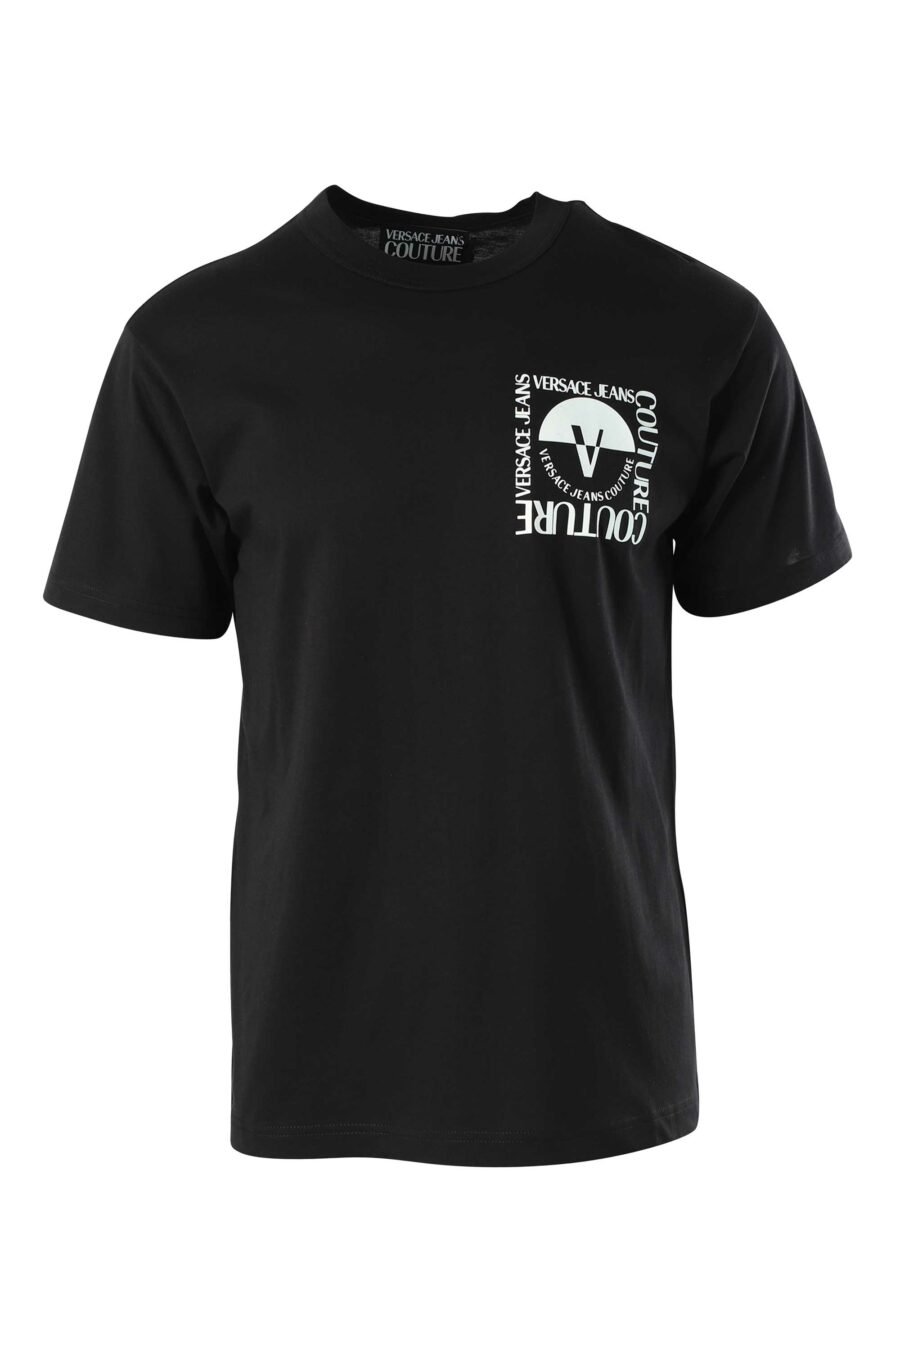 T-shirt preta com minilogo preto e branco - 8052019325522